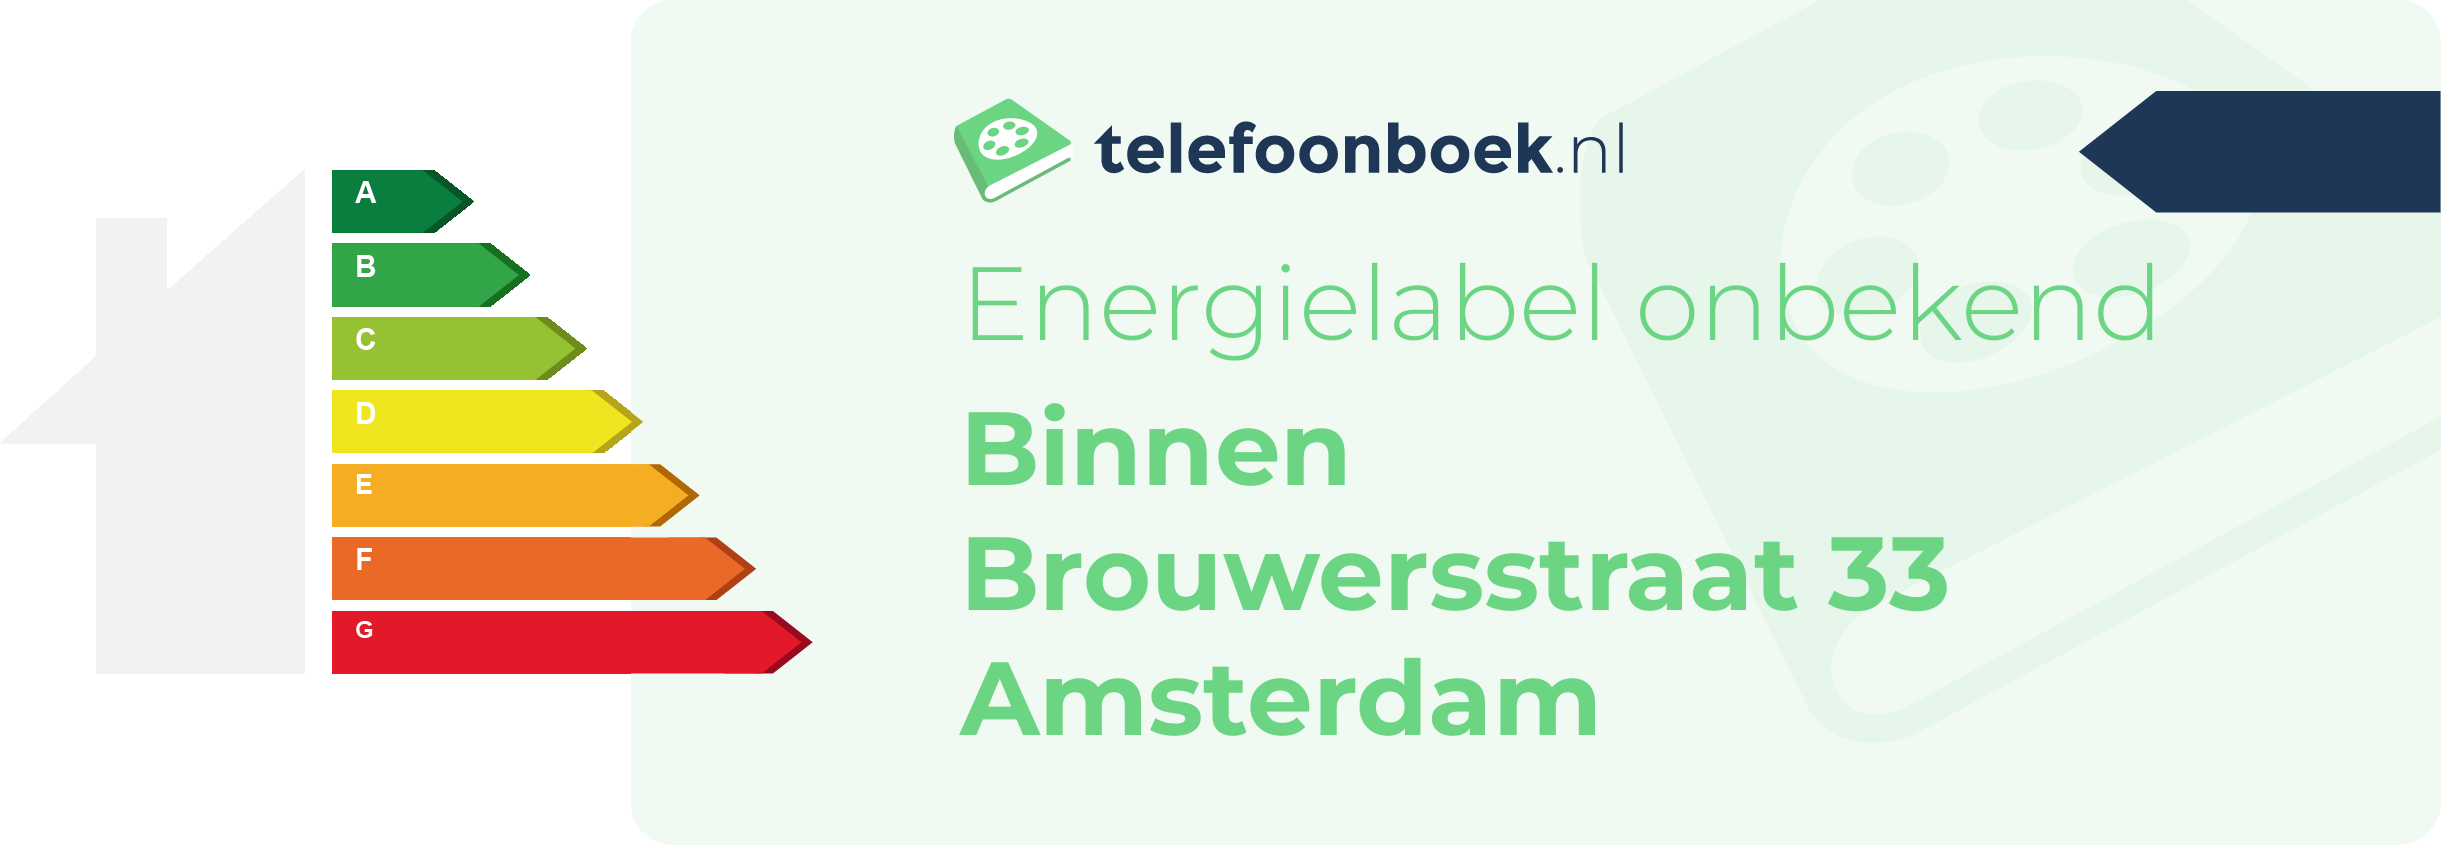 Energielabel Binnen Brouwersstraat 33 Amsterdam